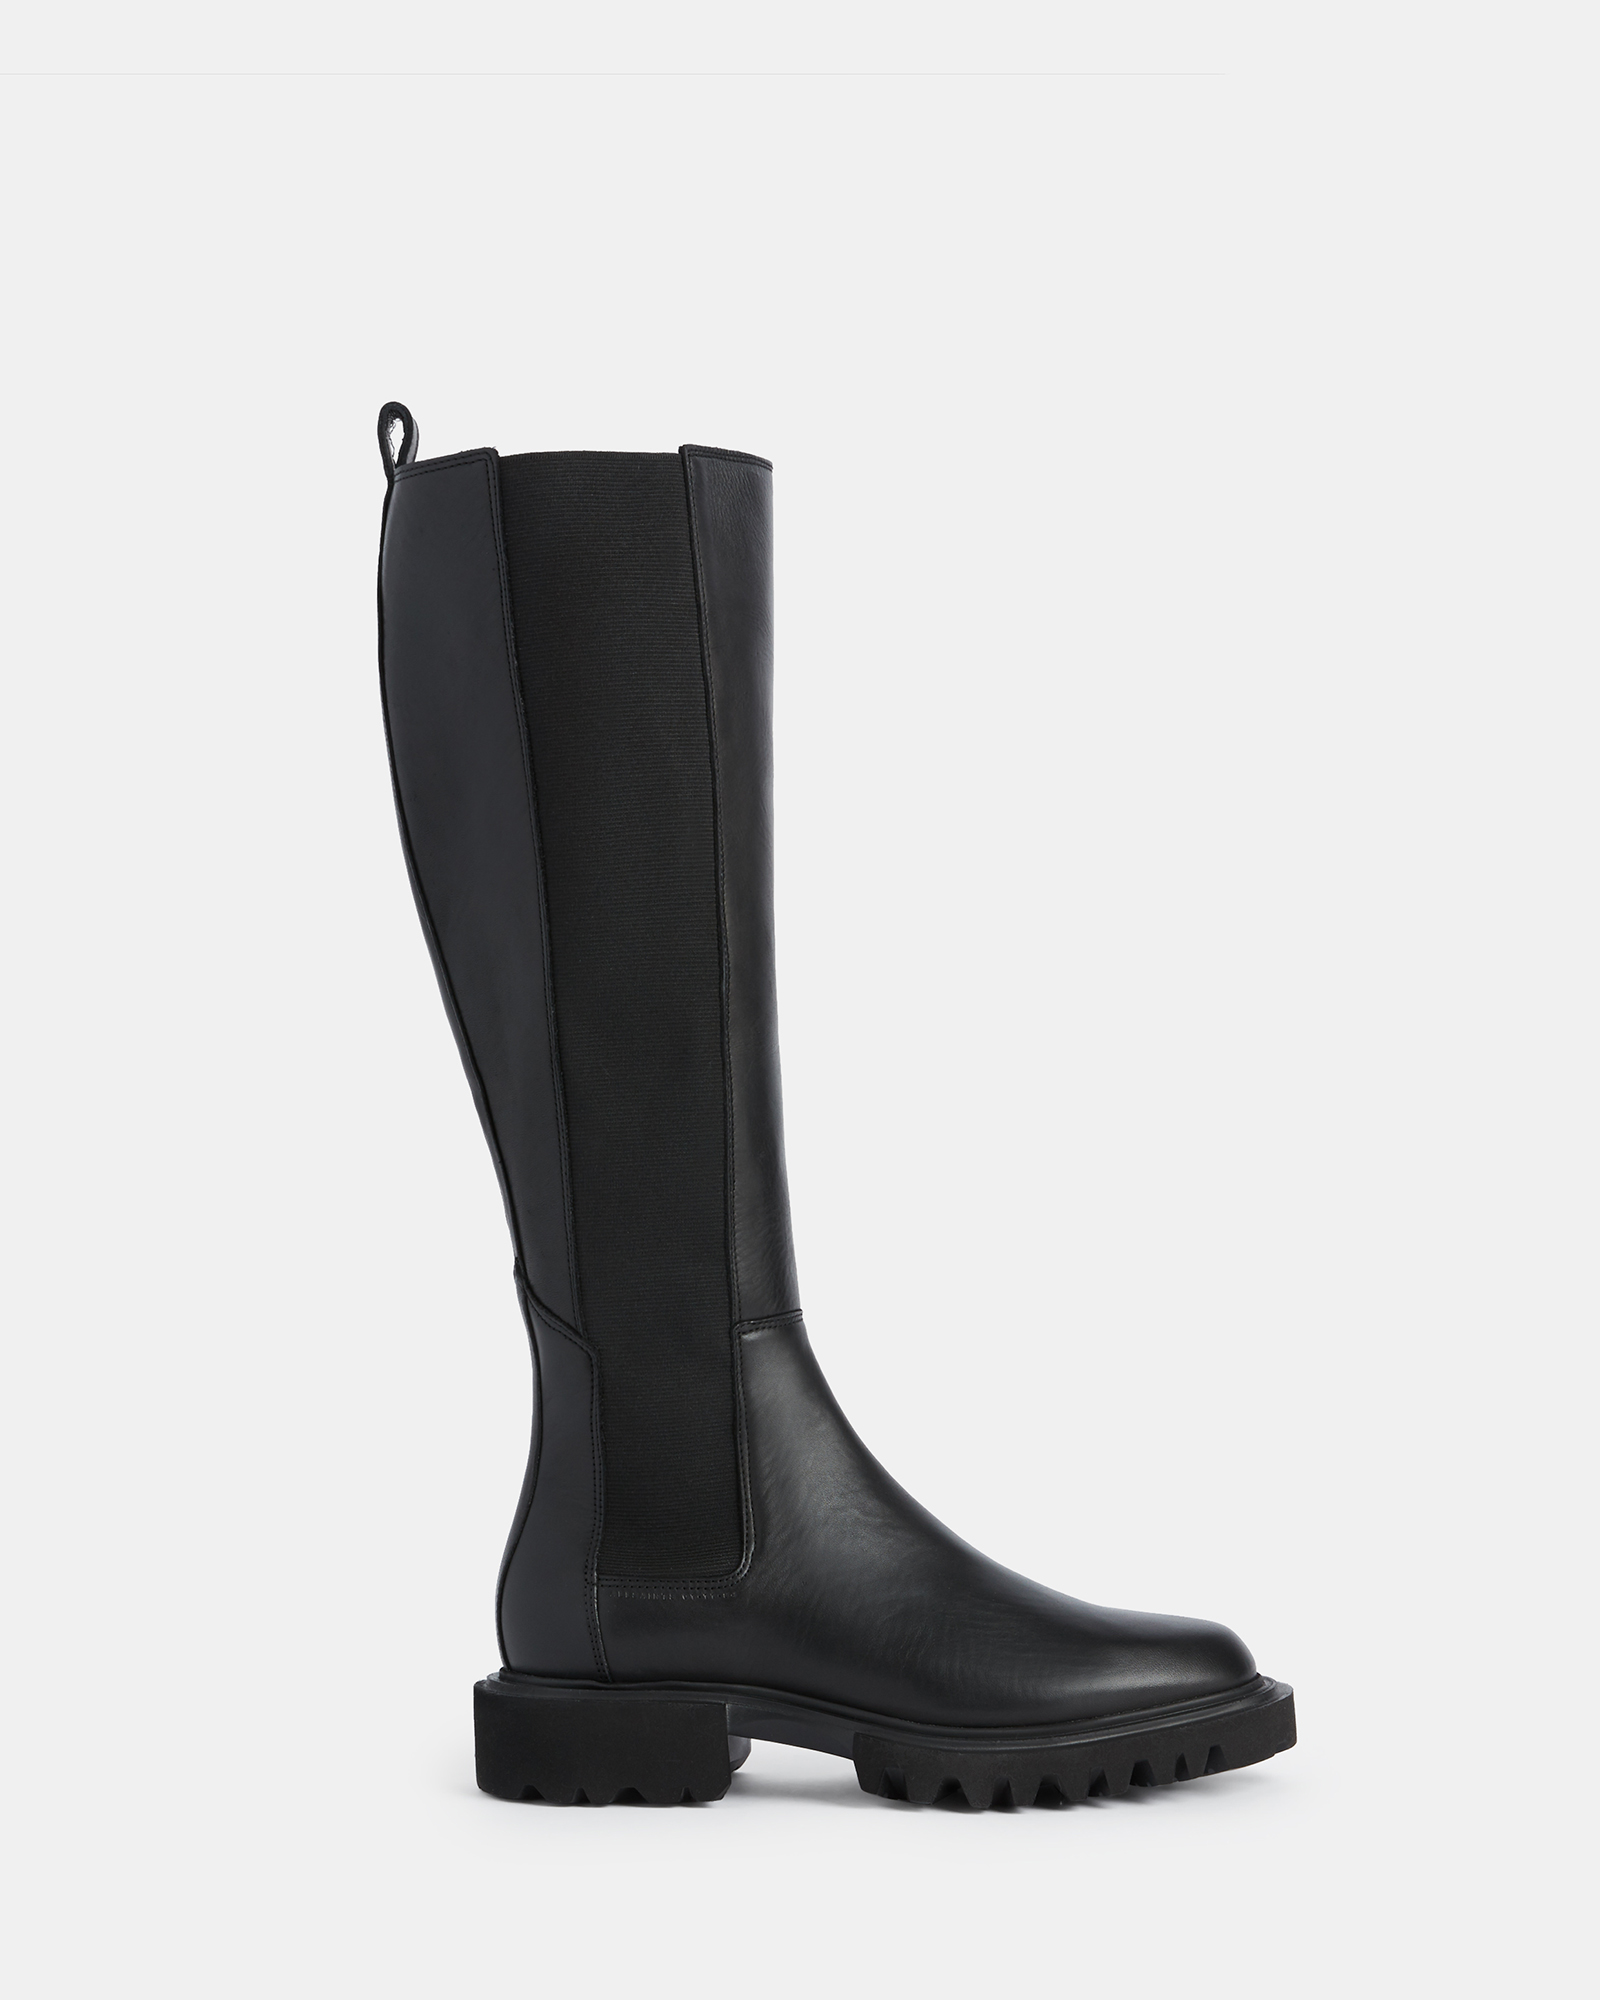 AllSaints Maeve Leather Boots,, Black, Size: UK